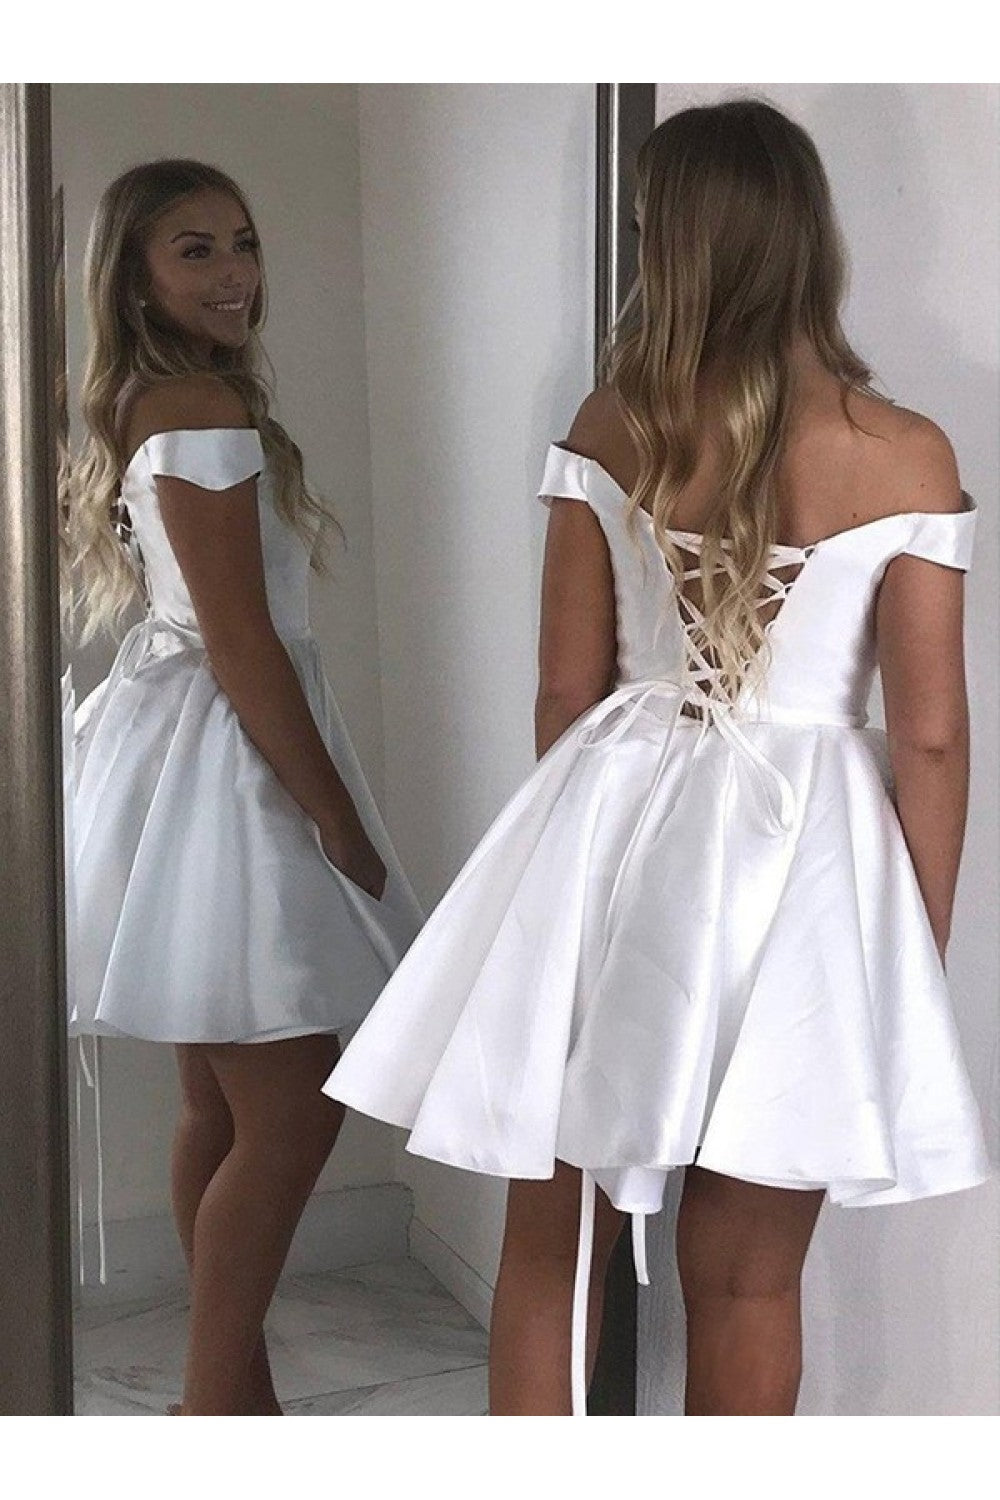 White Homecoming Dress 2020, Short Prom Dress ,Dresses For Graduation Party, Evening Dress, Formal Dress, DTH0749